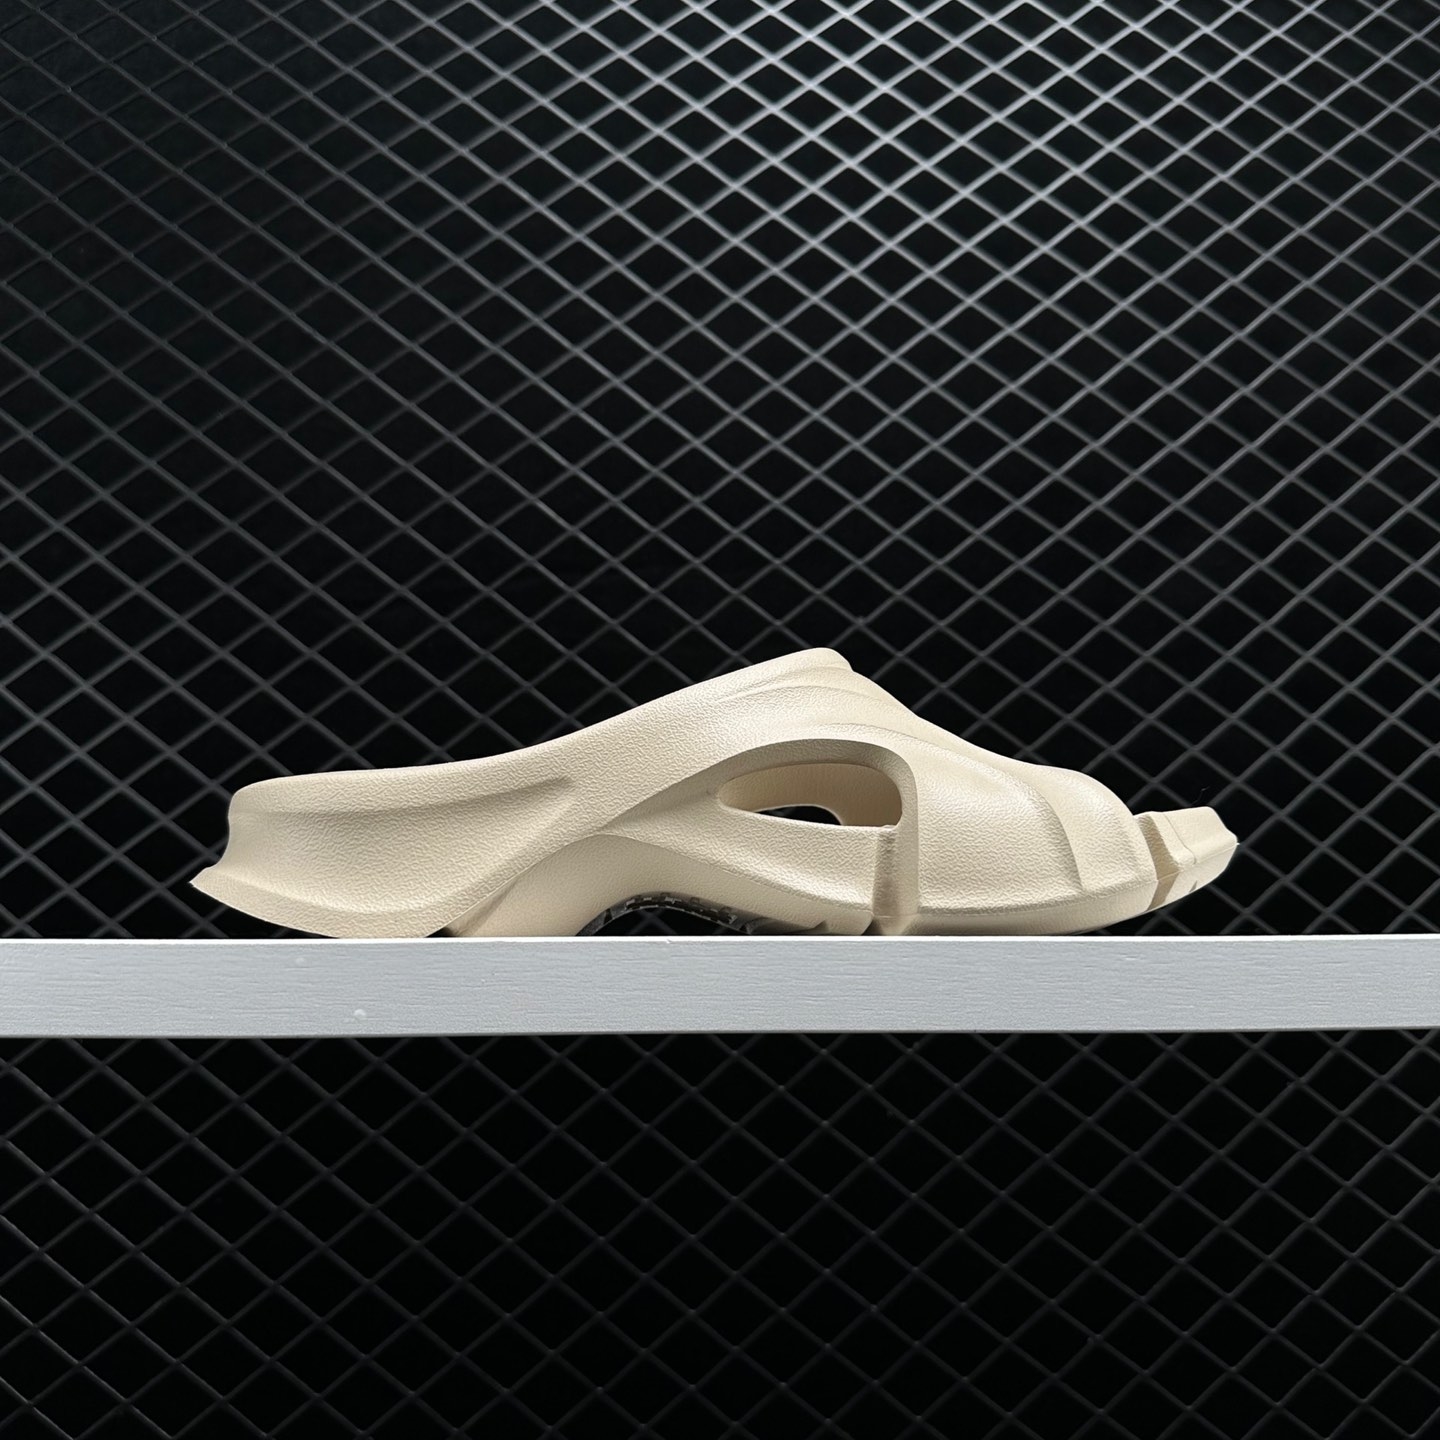 Balenciaga Mold Slide Sandal Beige: Comfortable and Stylish Footwear